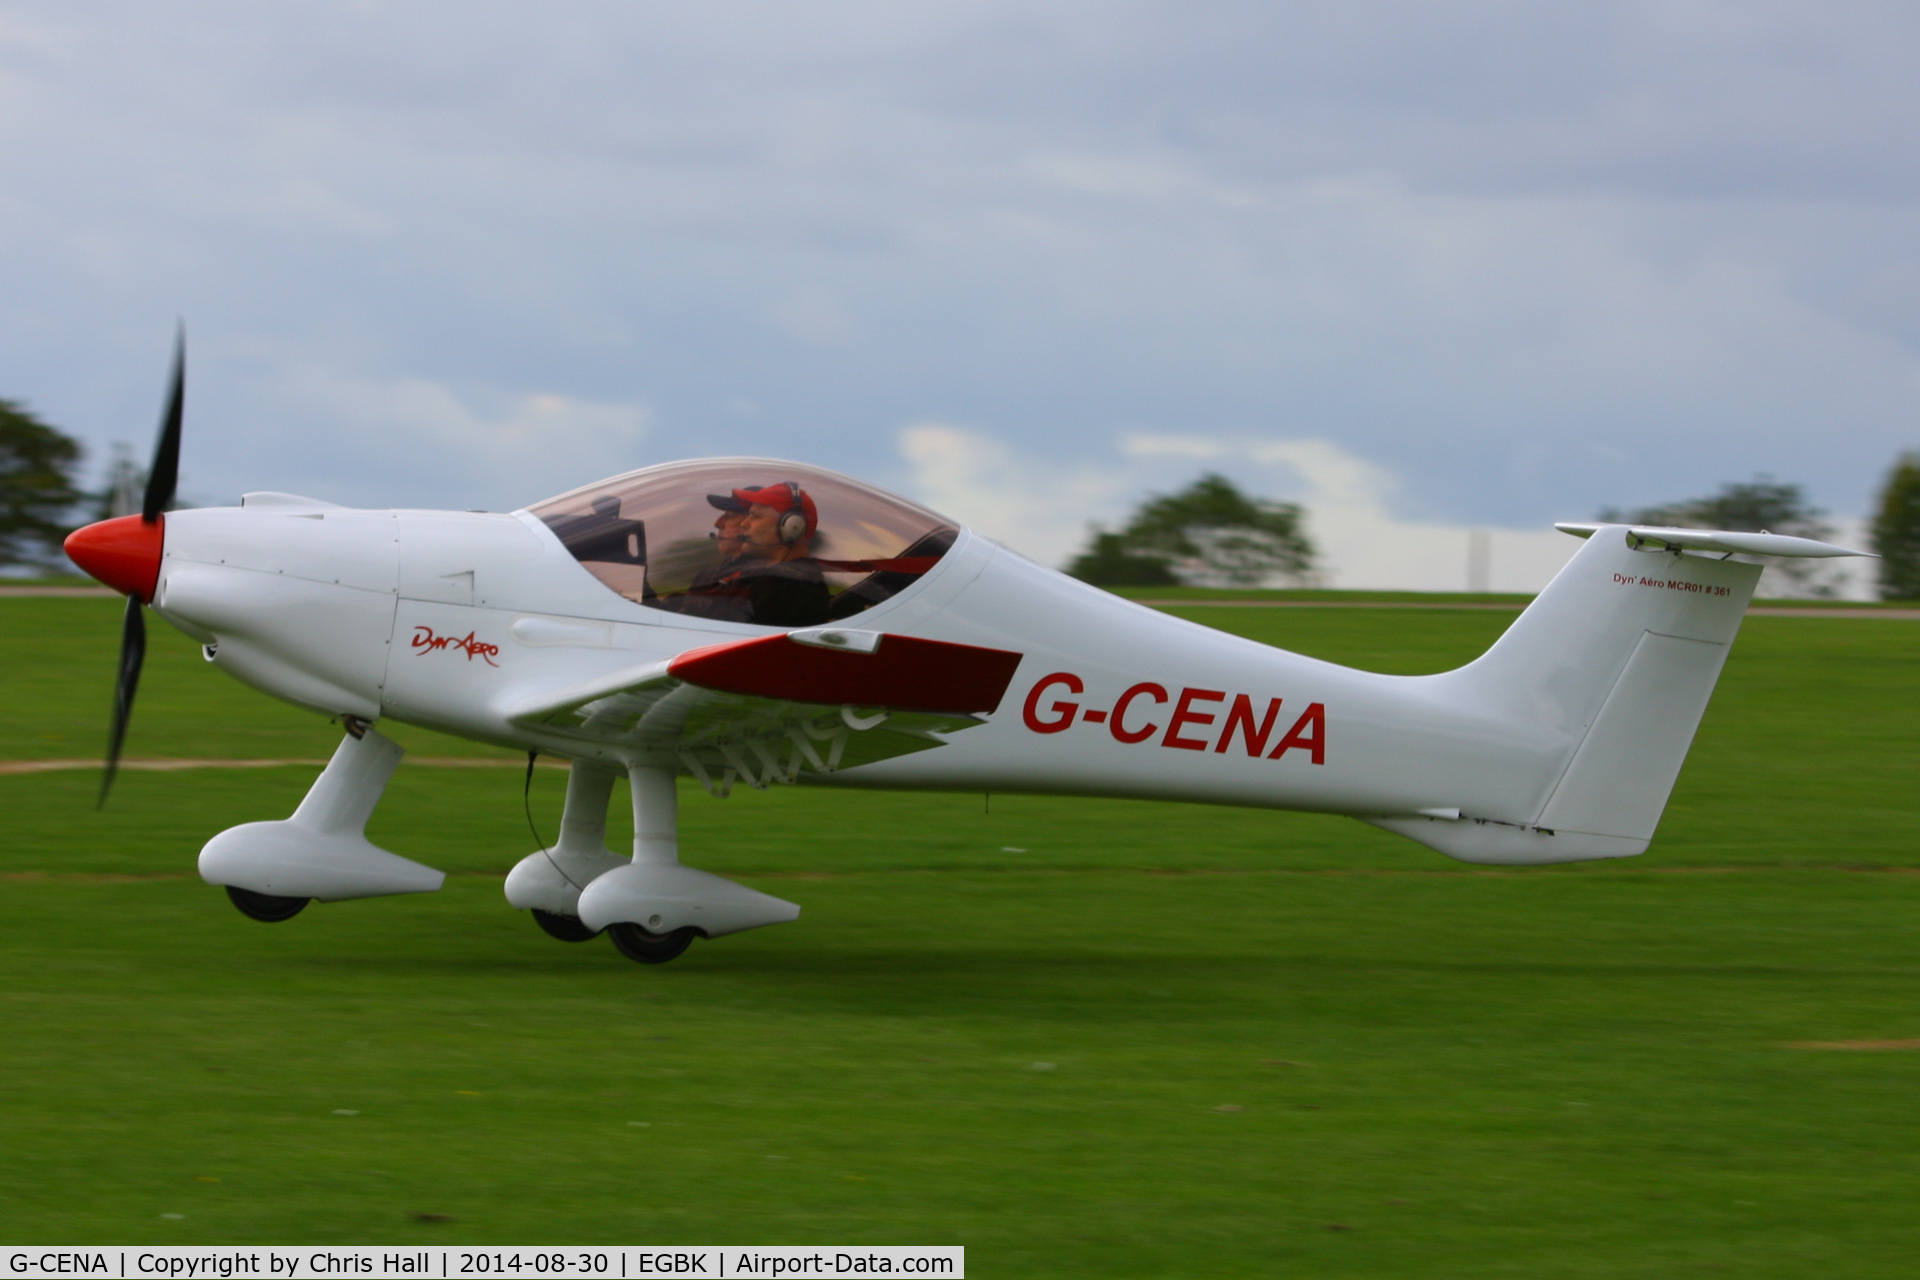 G-CENA, 2007 Dyn'Aero MCR-01 ULC Banbi C/N PFA 301B-14640, at the LAA Rally 2014, Sywell